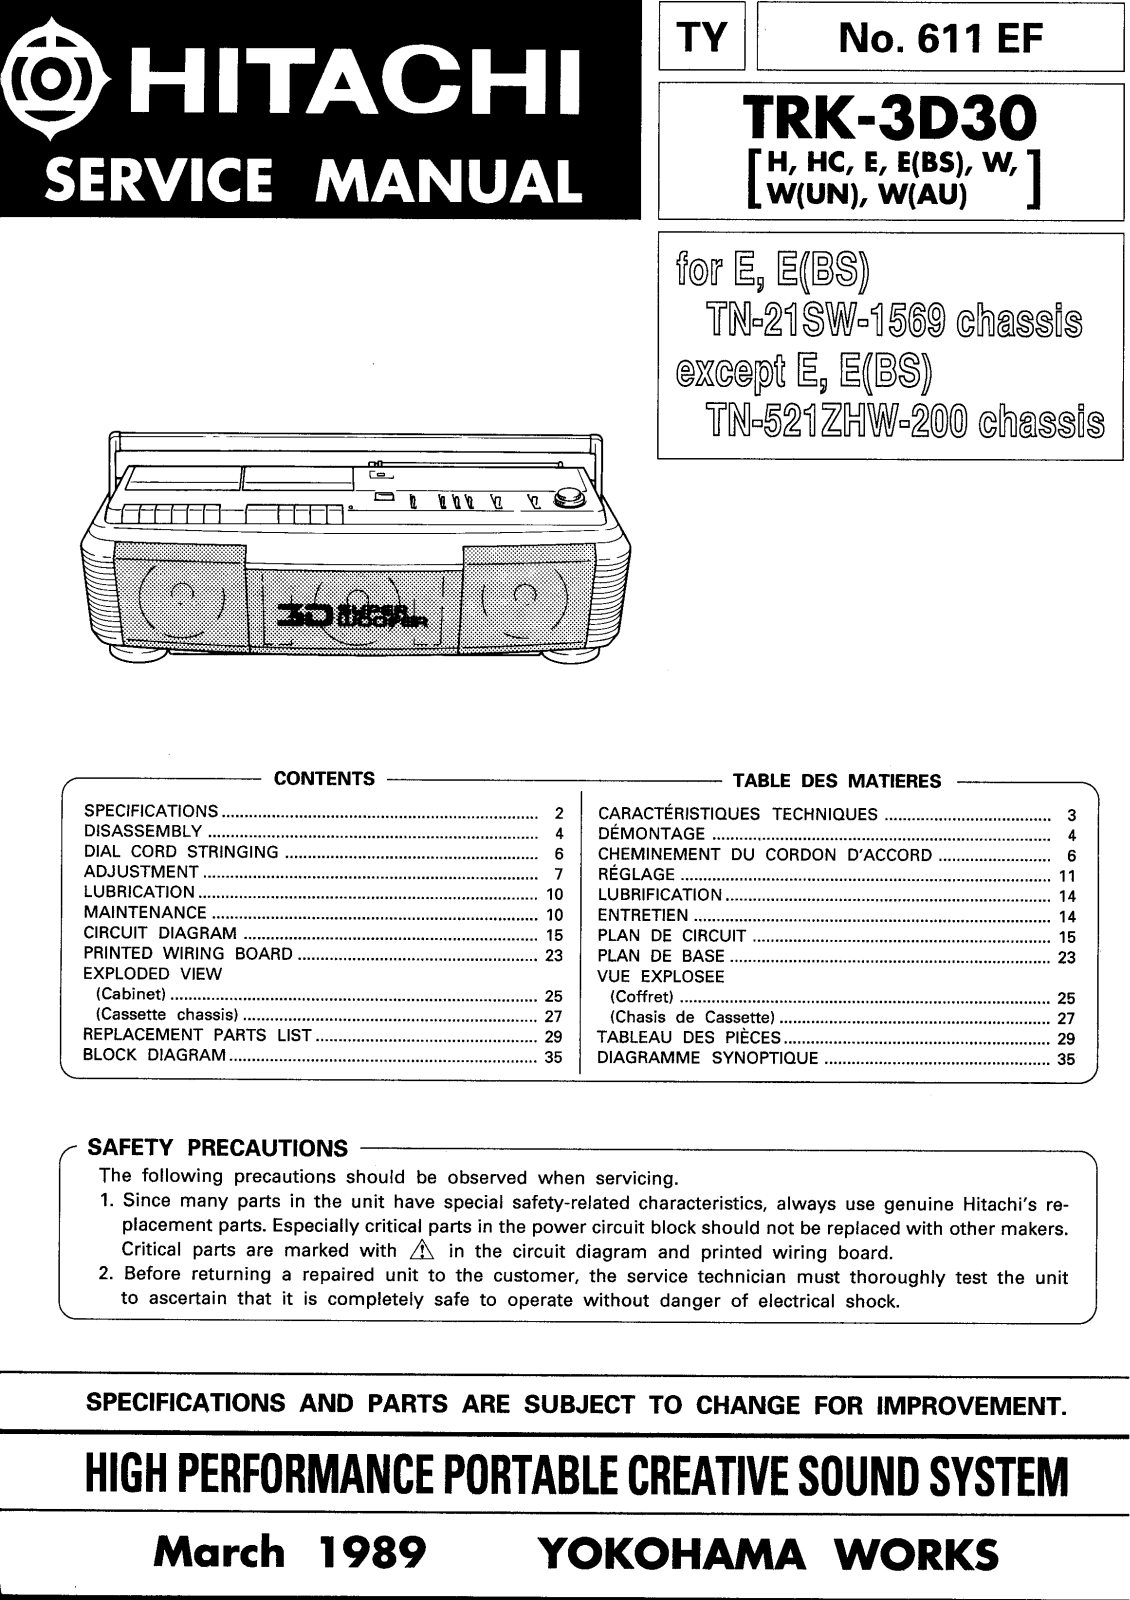 Hitachi TRK-3-D-30 Service Manual